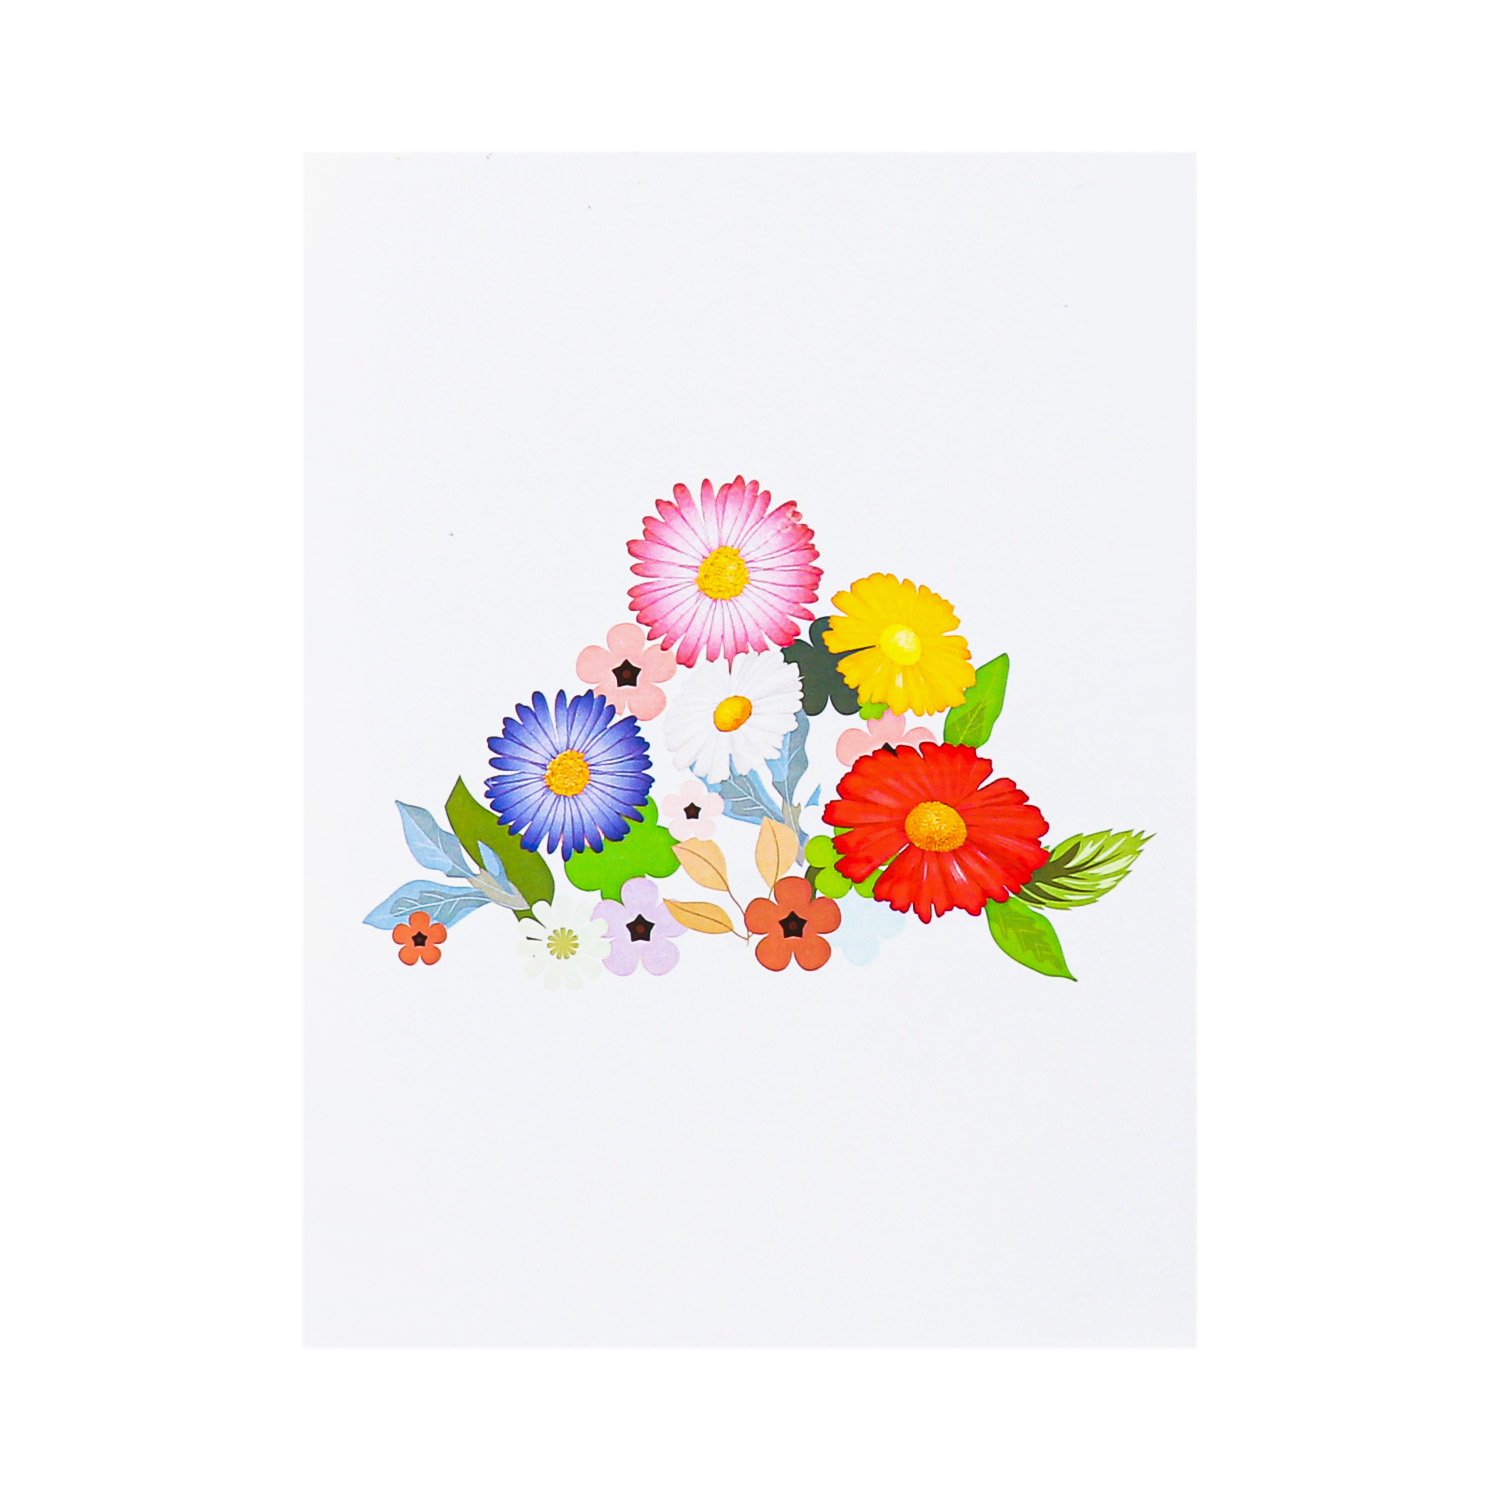 Daisy-Bouquet-Pop-Up-Card-FL086-cover-pop-up-card-wholesale-manufacturer-mothers-day-pop-up-card-flower-pop-up-card-birthday-3d-pop-up-greeting-card-laser-cut-1.jpg